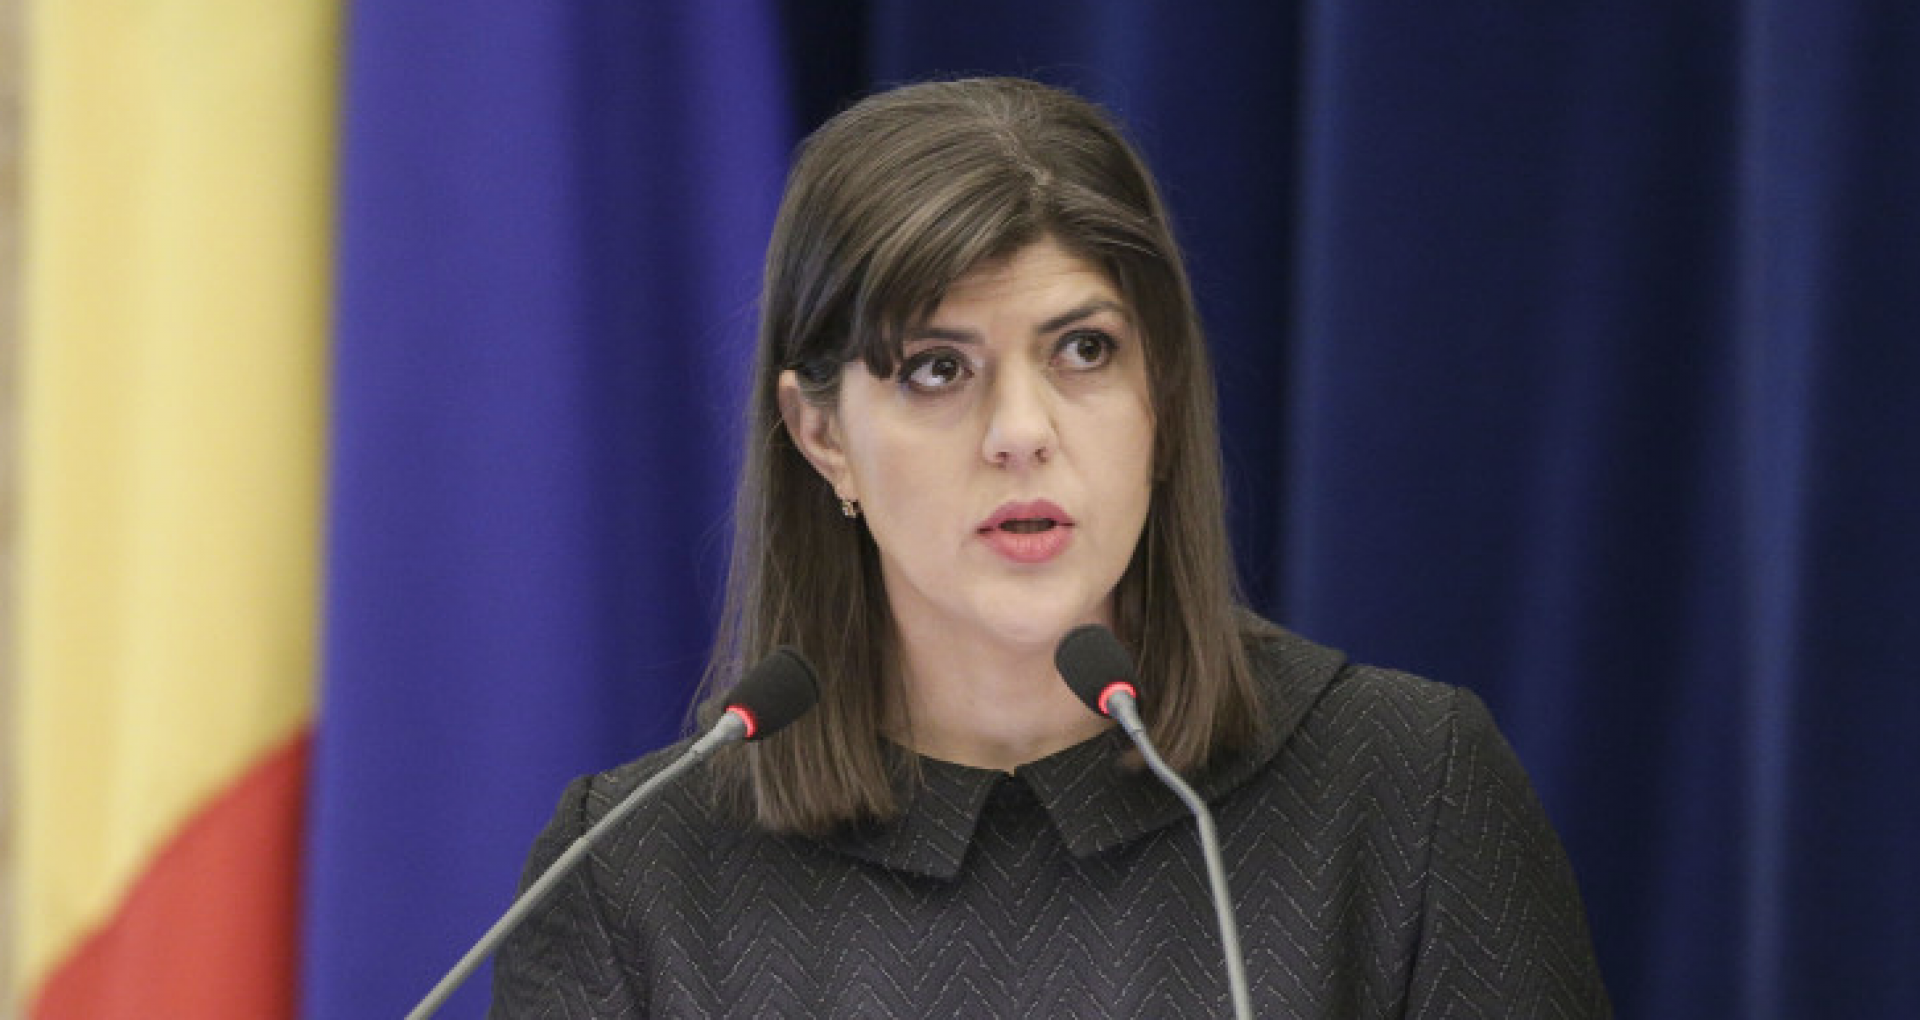 Laura Codruța Kovesi, Chief Prosecutor of the European Prosecutor’s Office, is coming to Chișinău